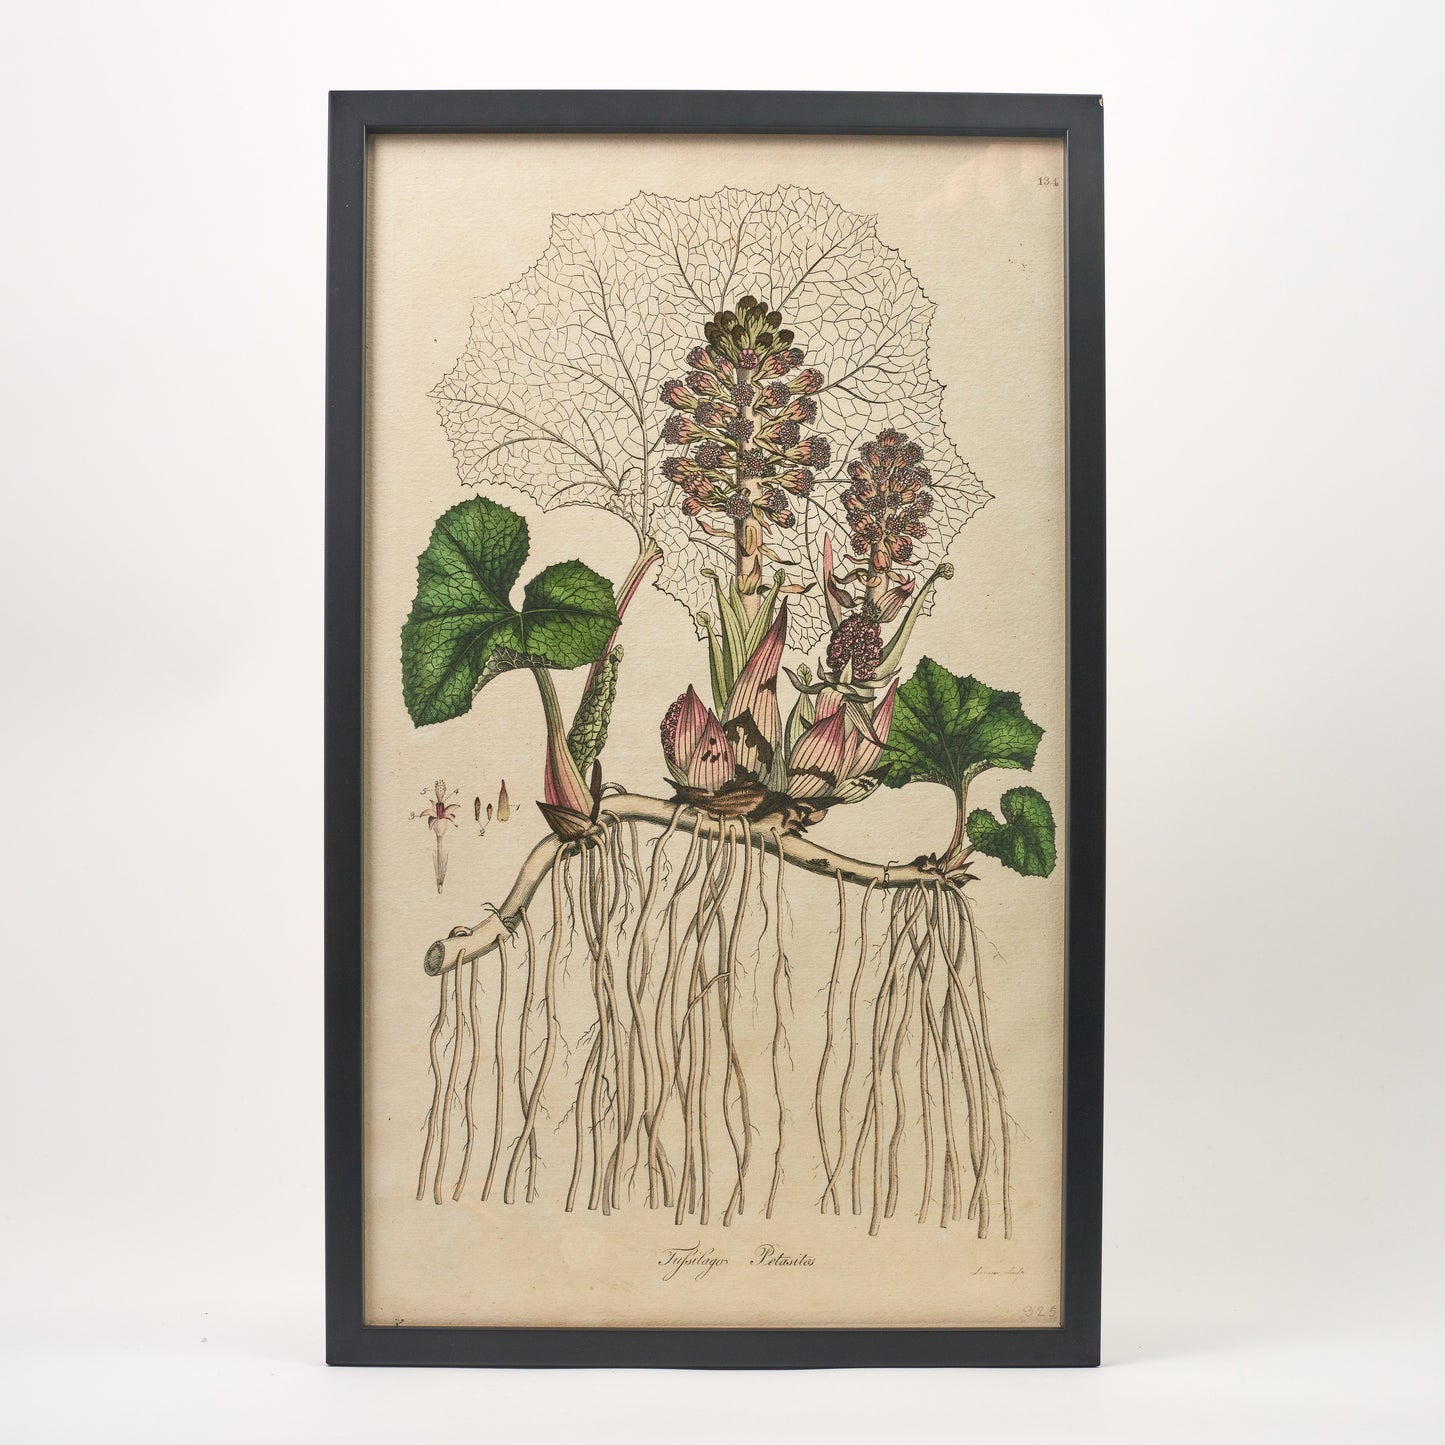 Tufsilago Petasites ‘Flora Londinensis’ Botanical Print - Framed